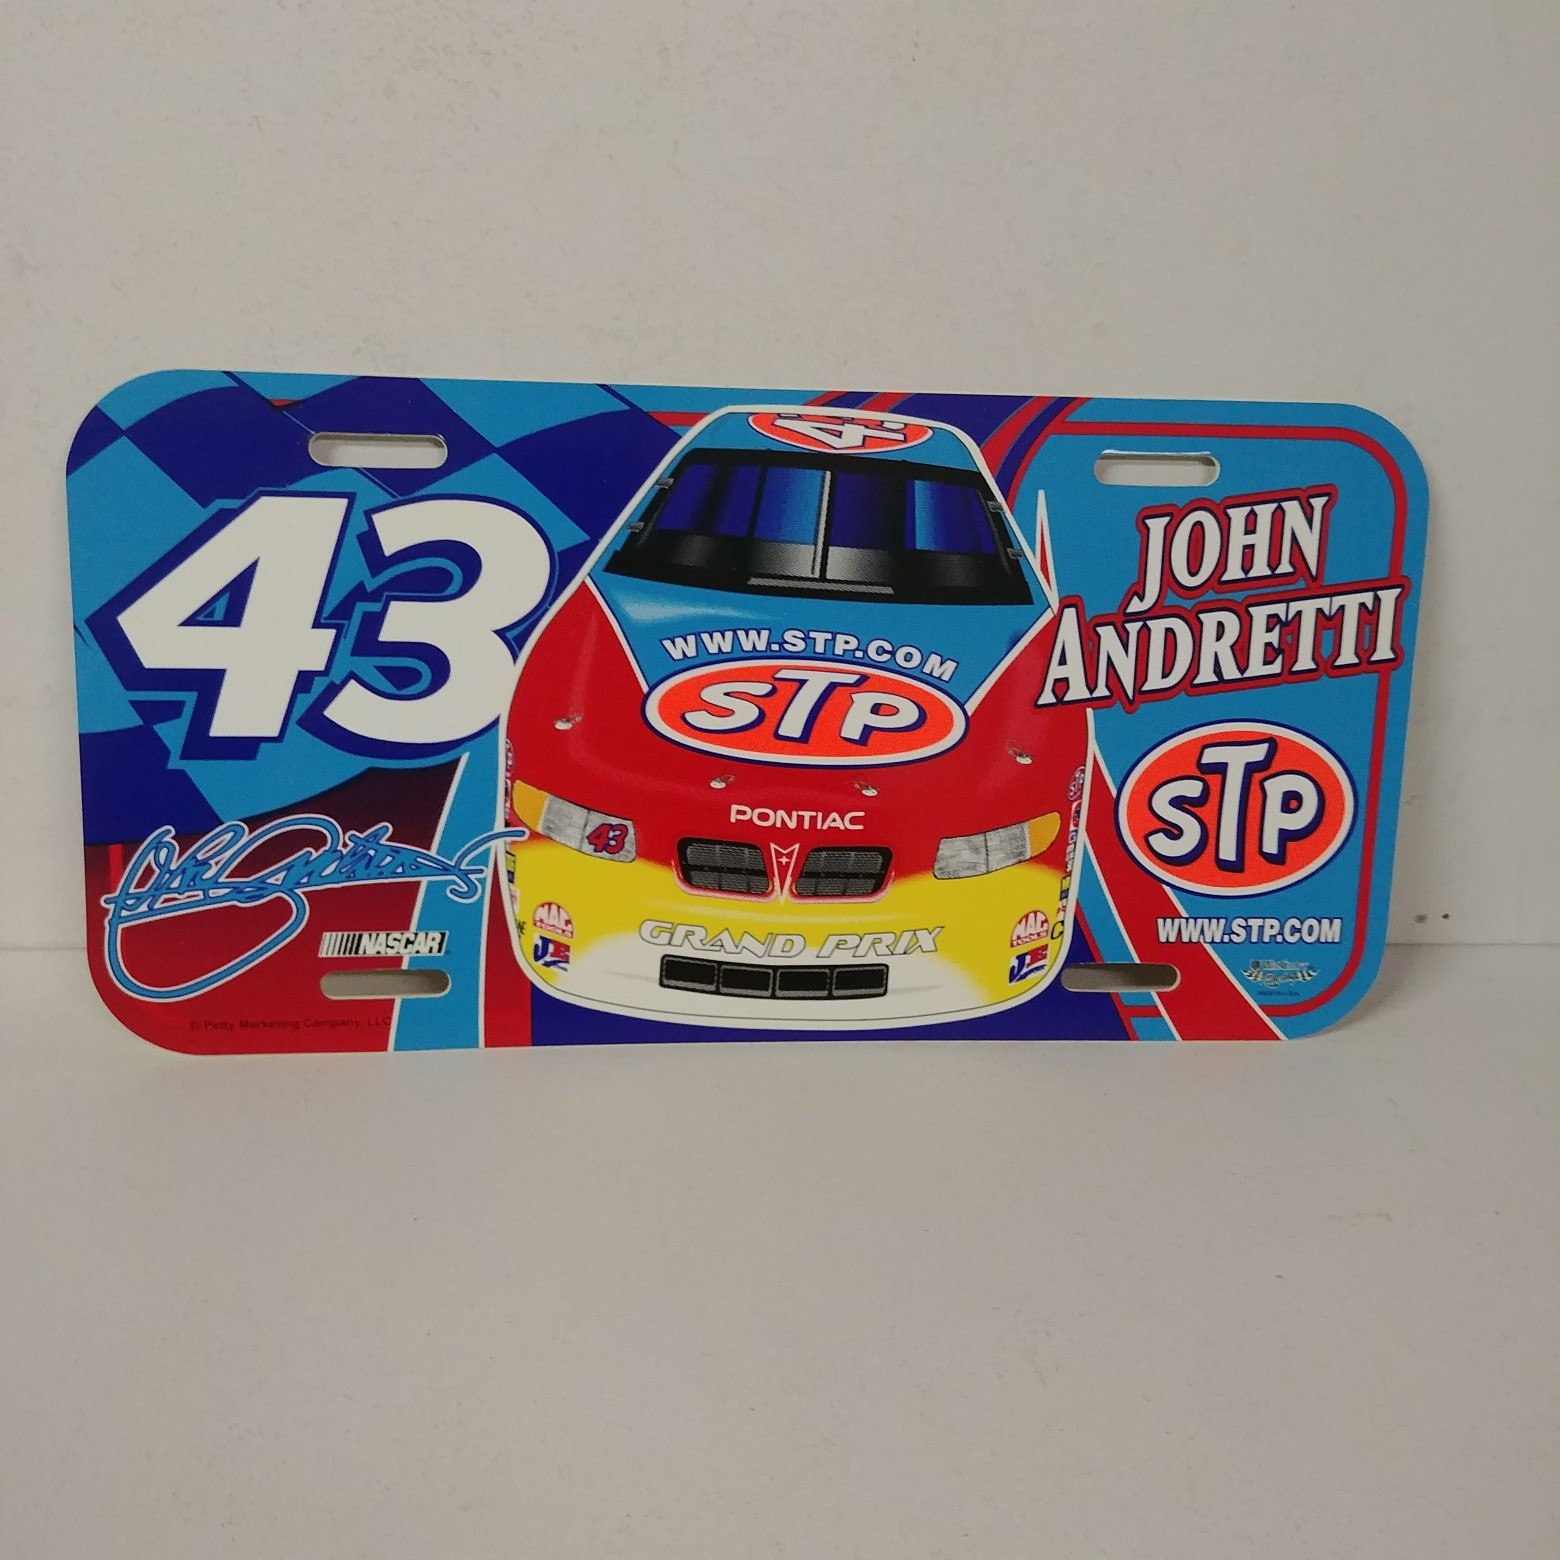 1999 John Andretti STP plastic license plate